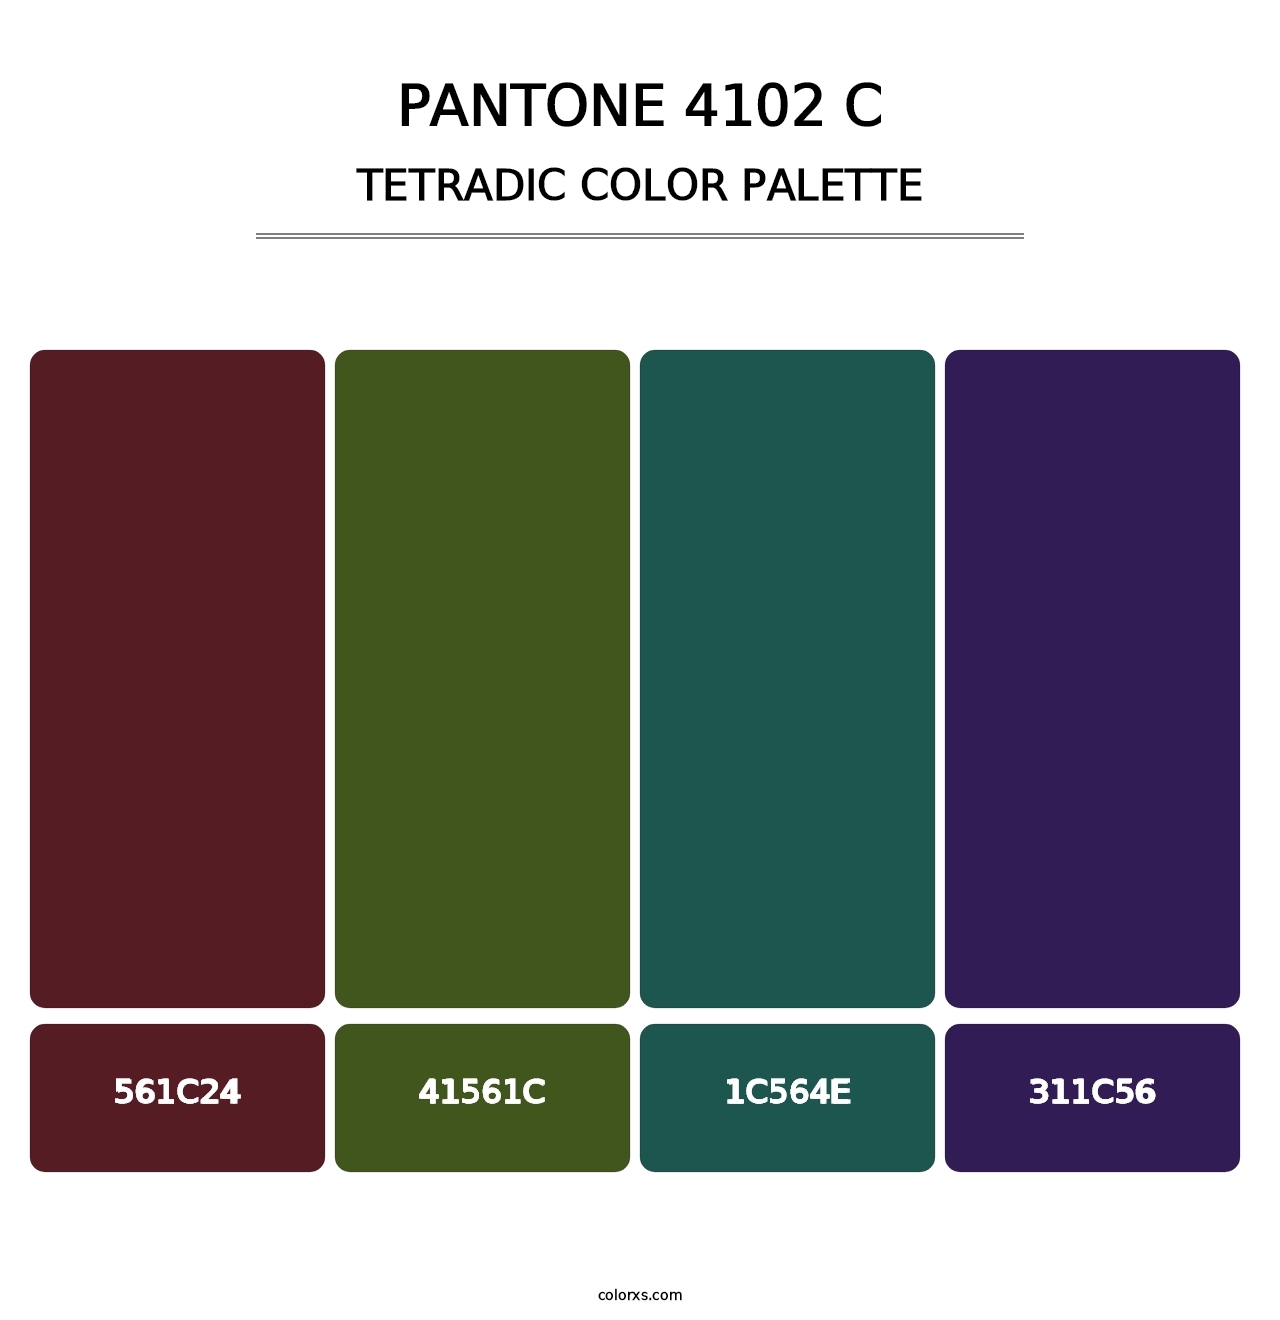 PANTONE 4102 C - Tetradic Color Palette